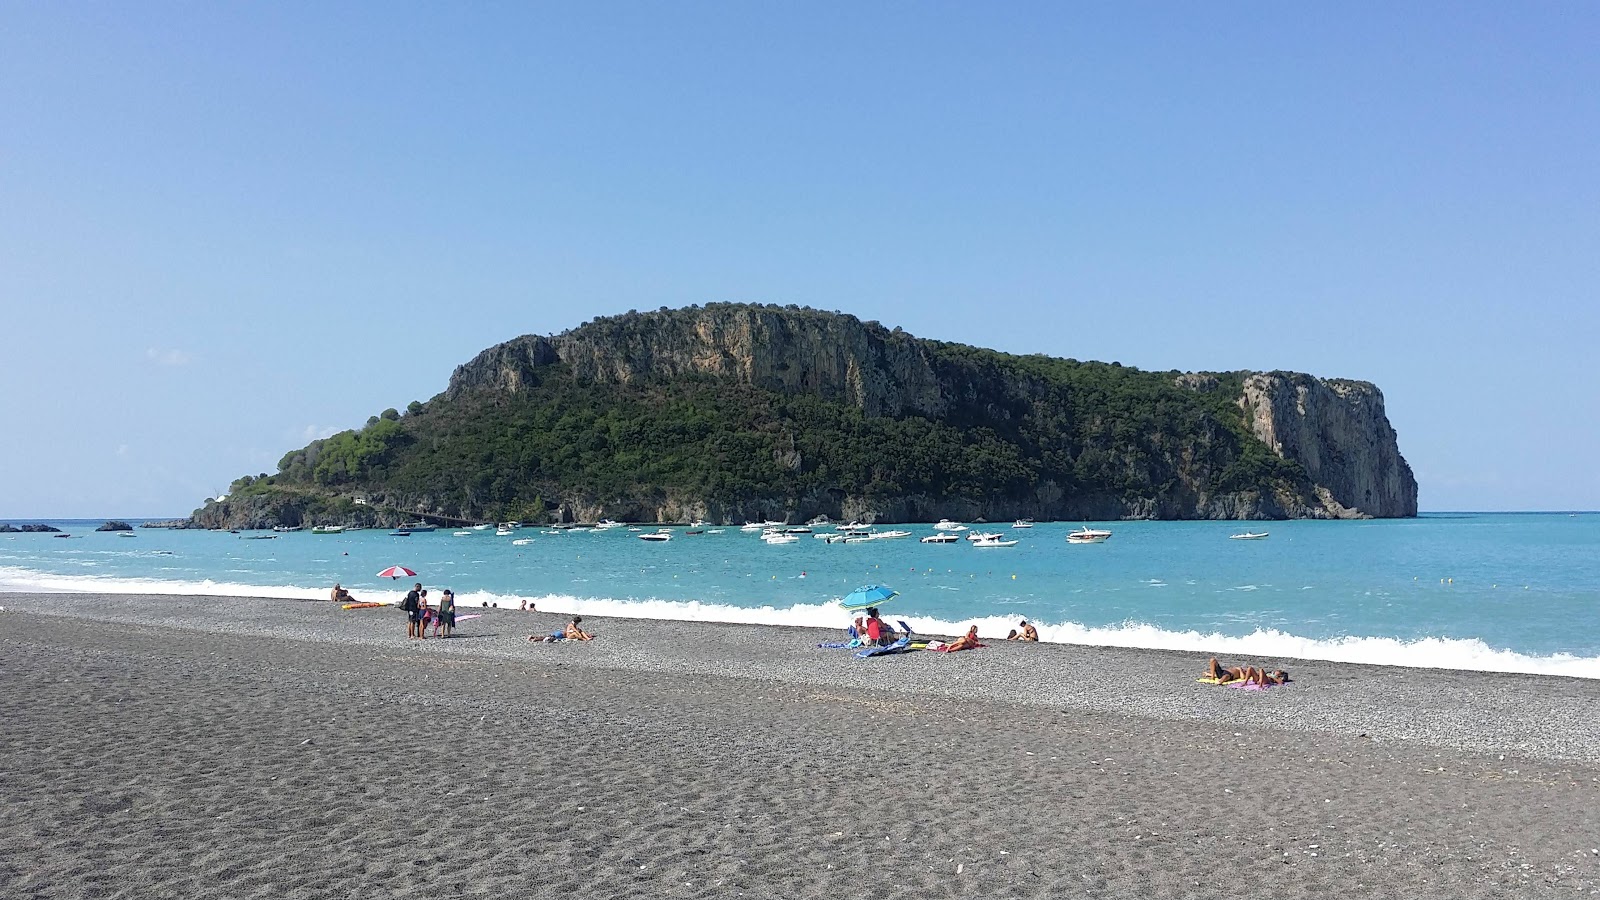 Spiaggia Praia a Mare的照片 带有灰色细卵石表面